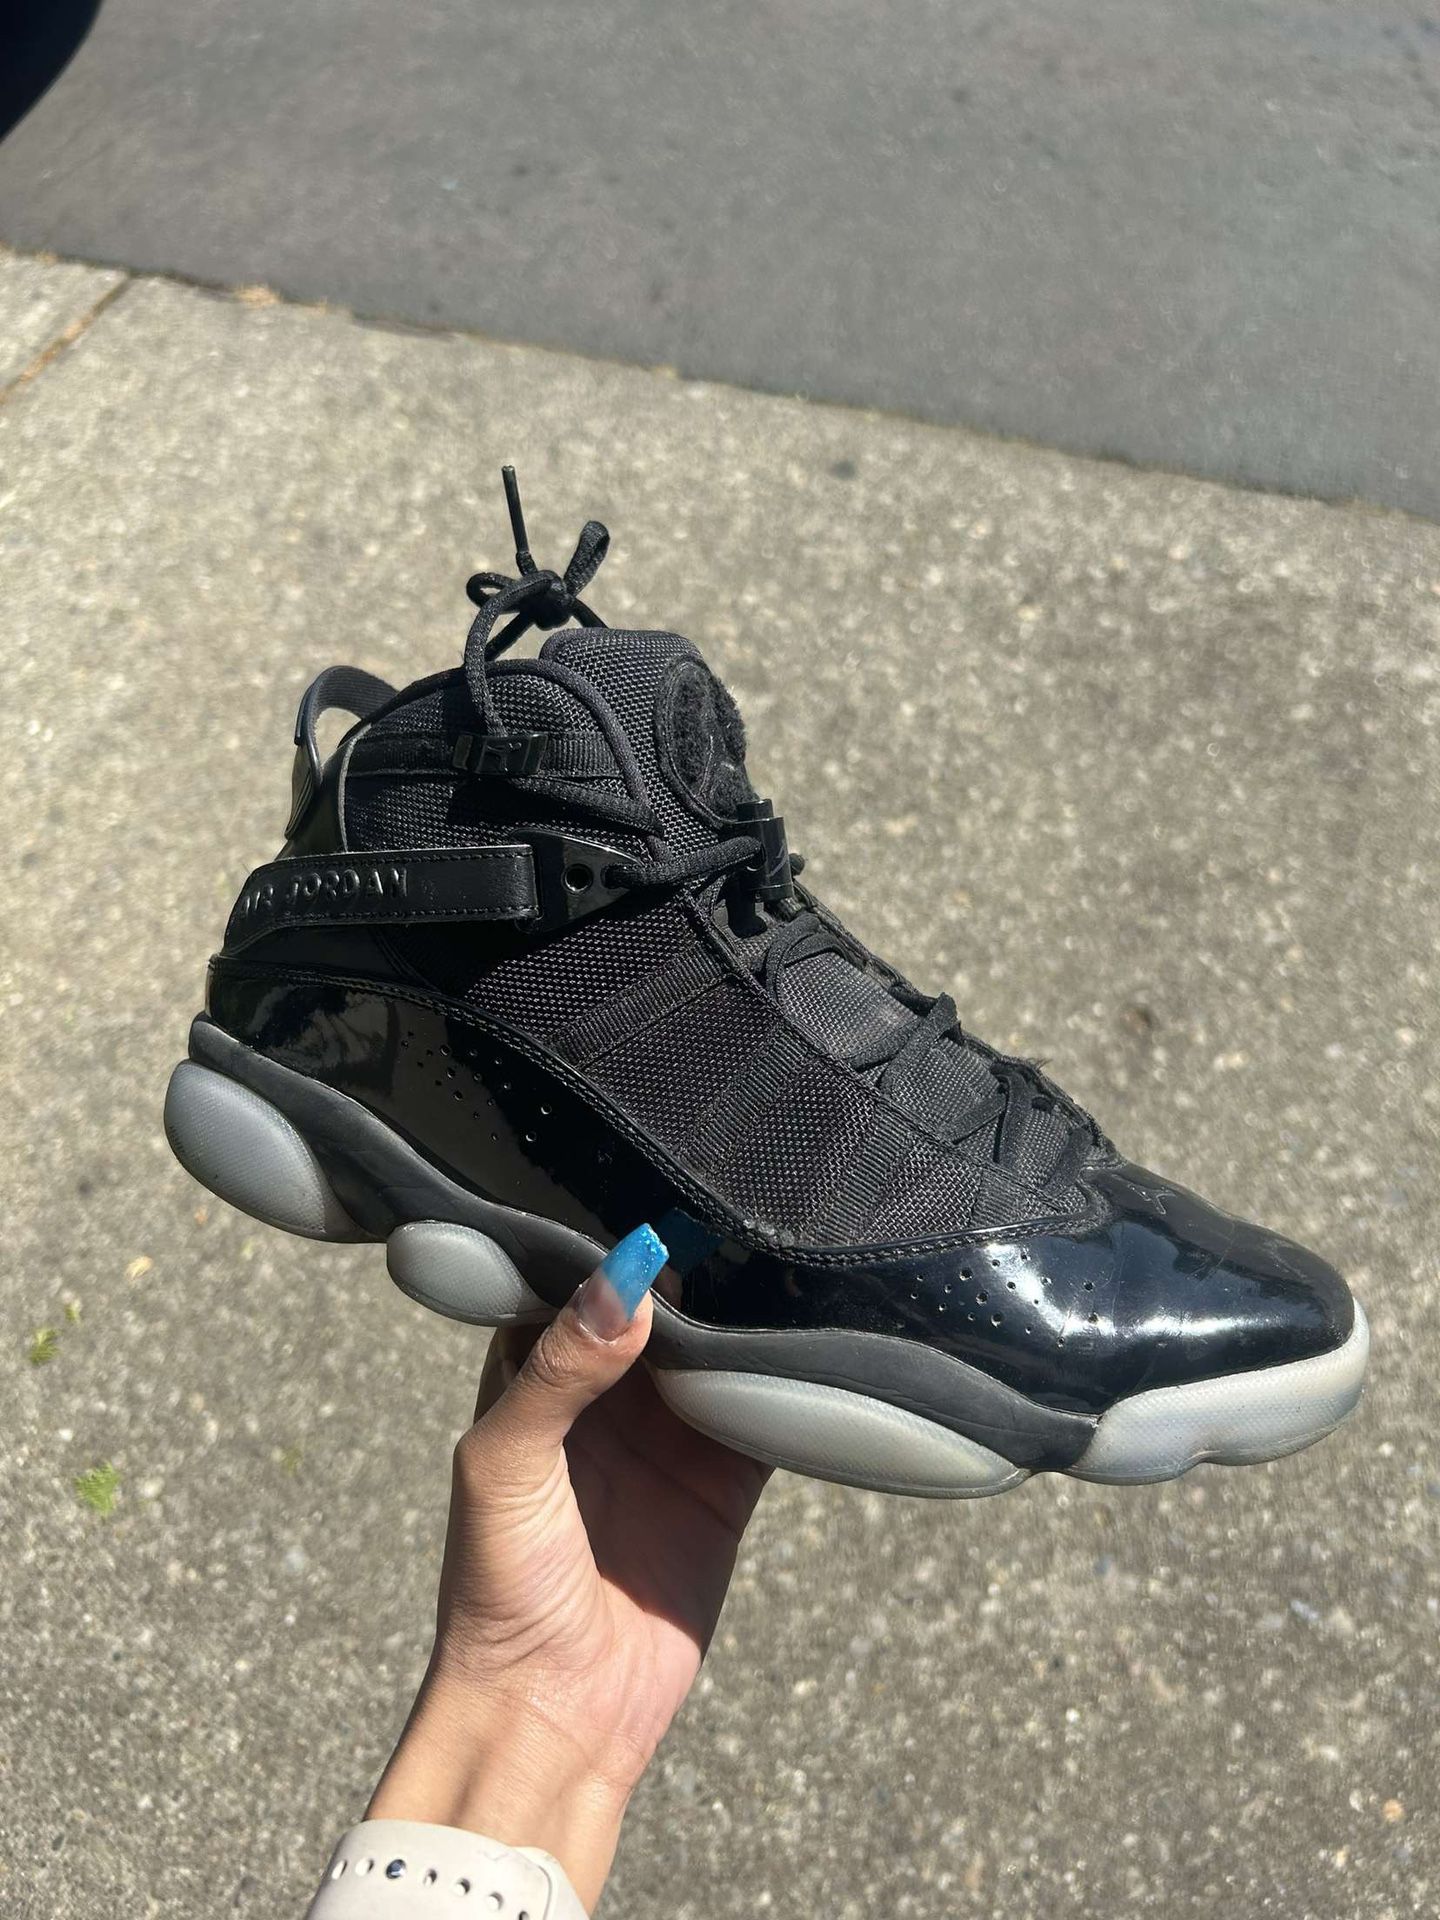 Jordan 6 Rings Black Size 10.5